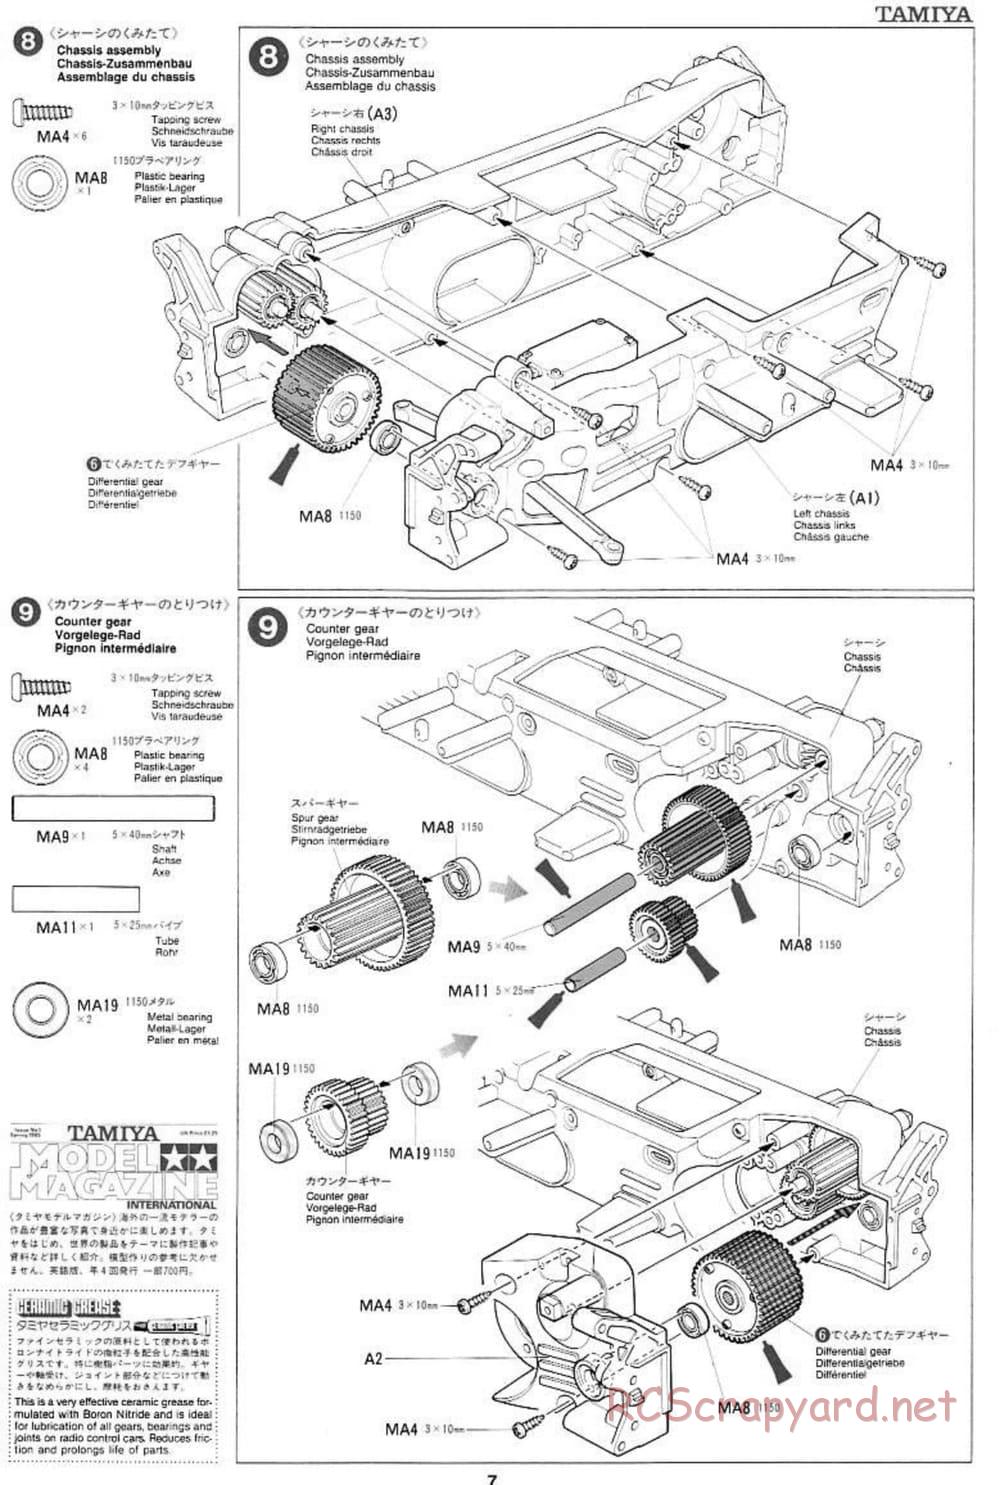 Tamiya - Subaru Impreza WRC - TL-01 Chassis - Manual - Page 7